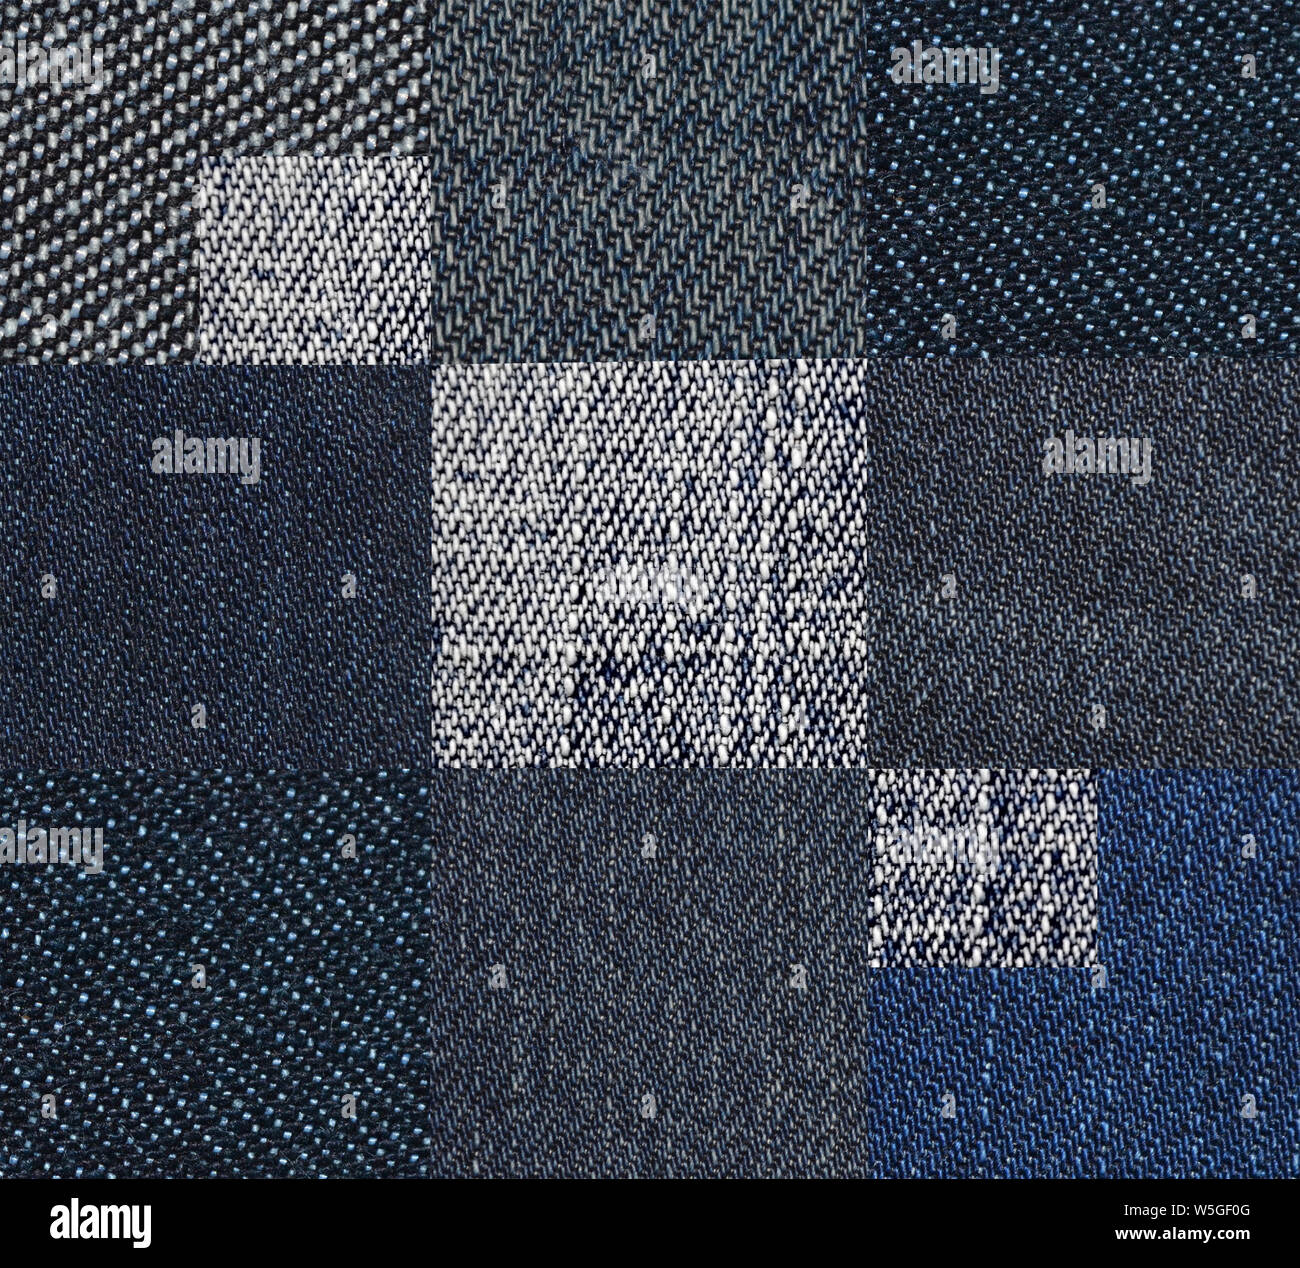 Textura de tela de jean fotografías e imágenes de alta resolución - Alamy